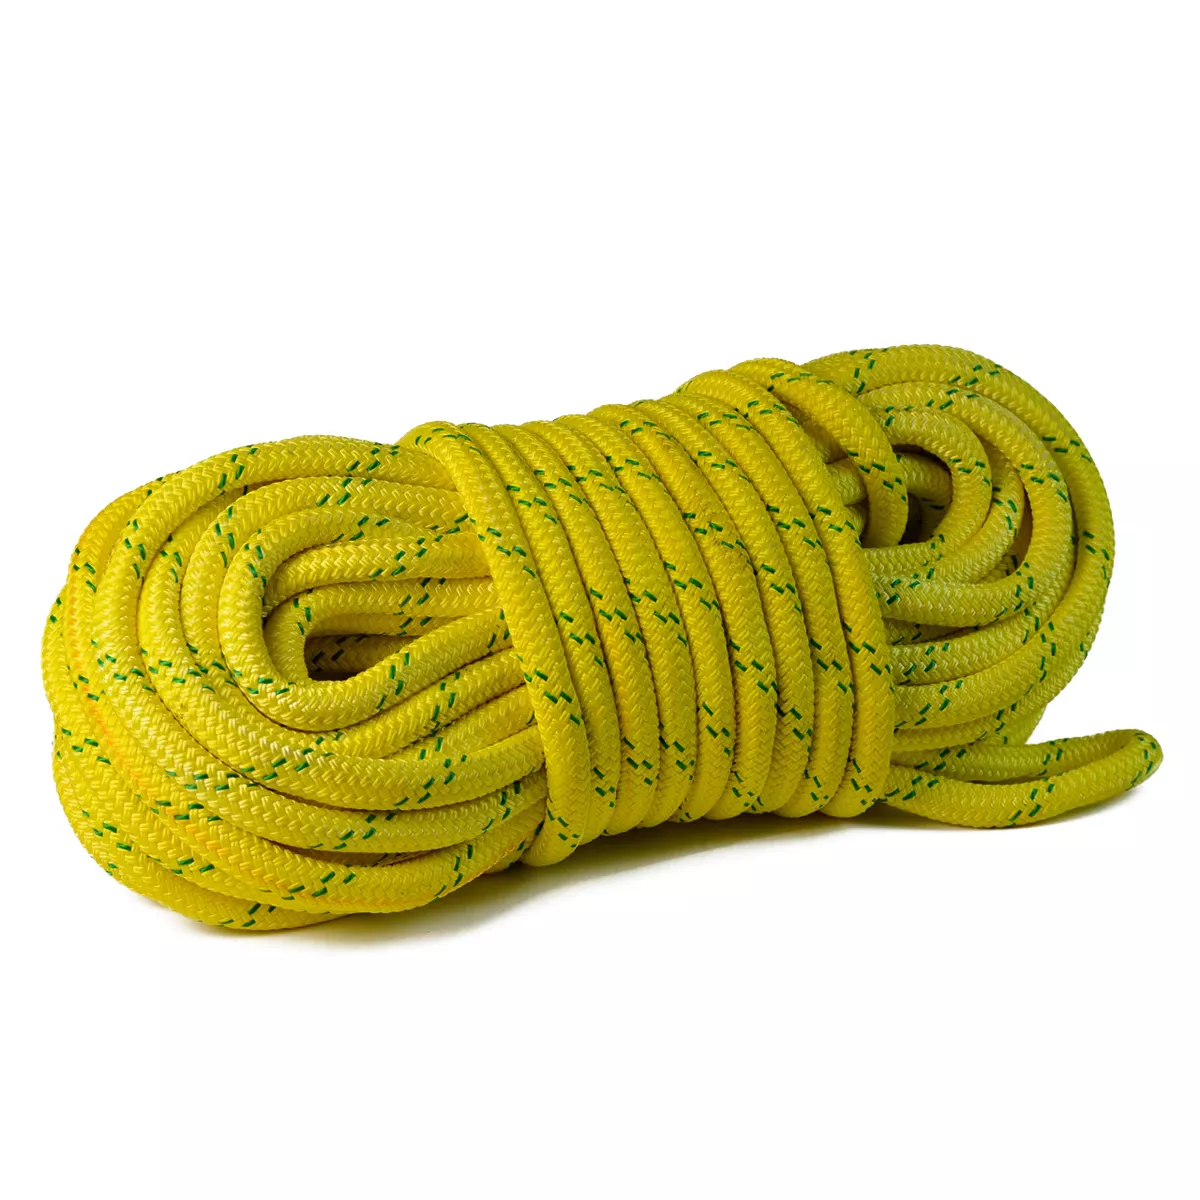 Buy 3/4 - Matador™ Bull Rope  Rigging Rope for Arborists online